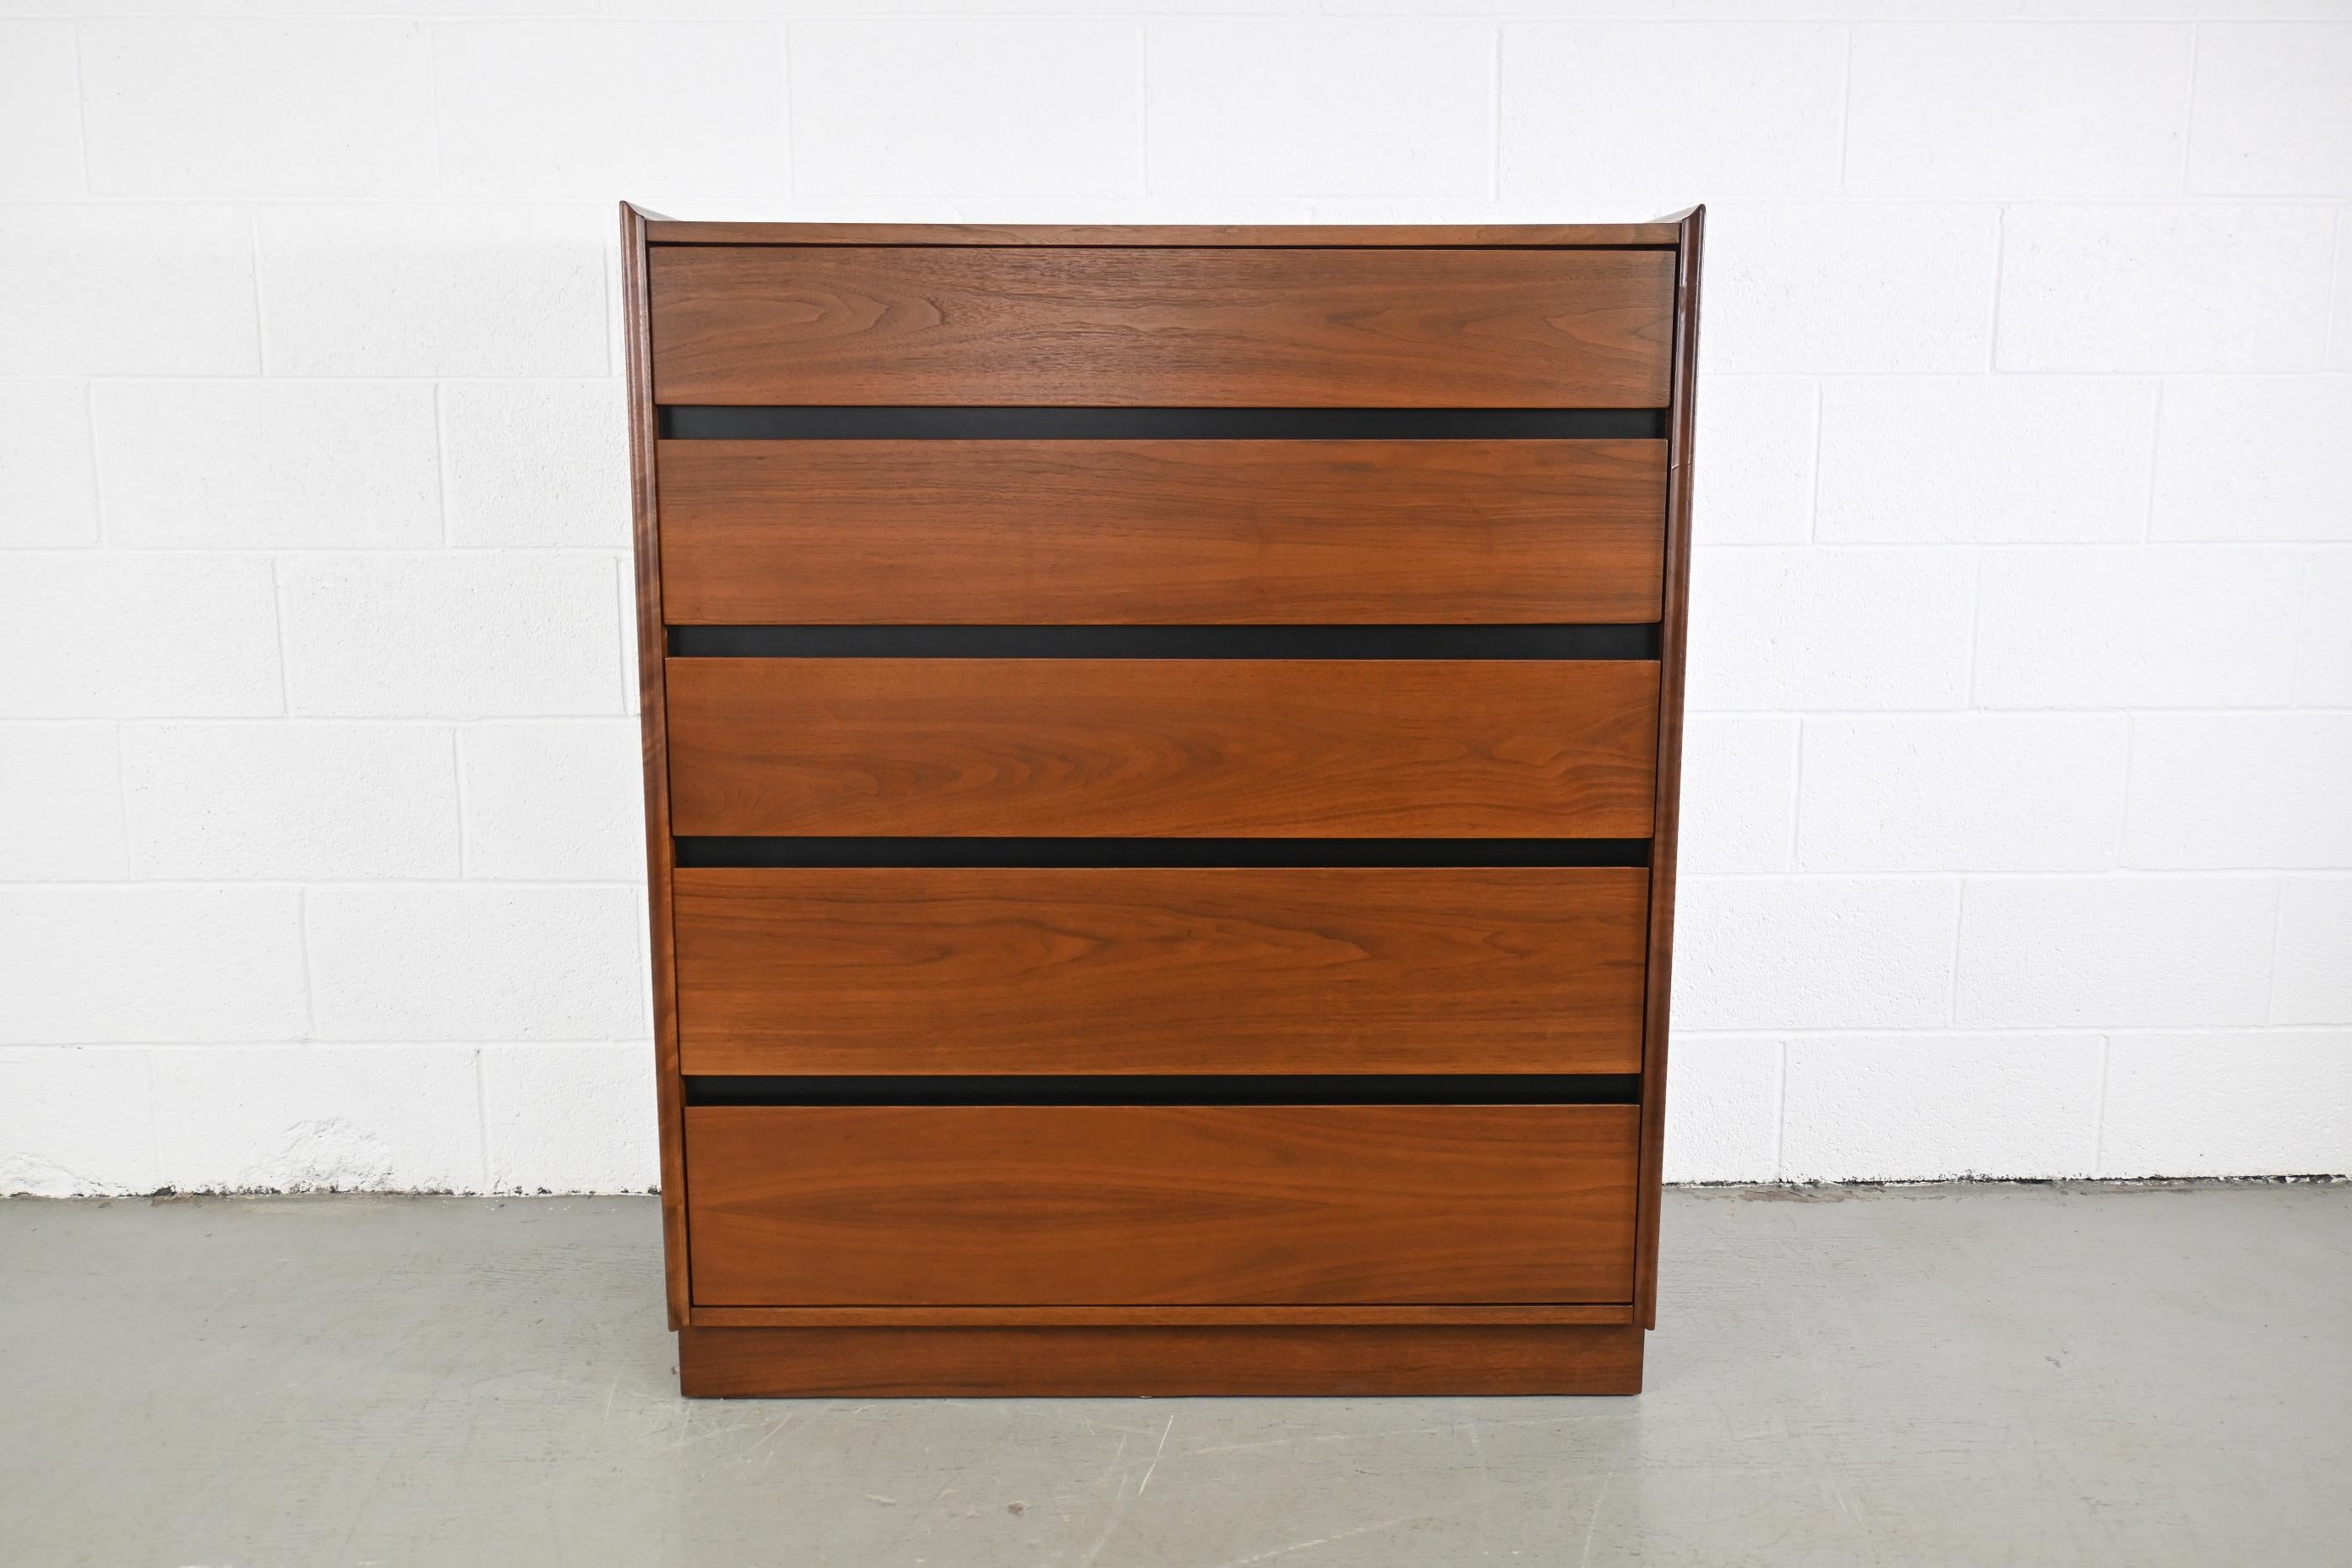 Dillingham Mid-Century Modern Walnut Highboy Dresser

Dillingham Furniture, 1970s, USA

40.13